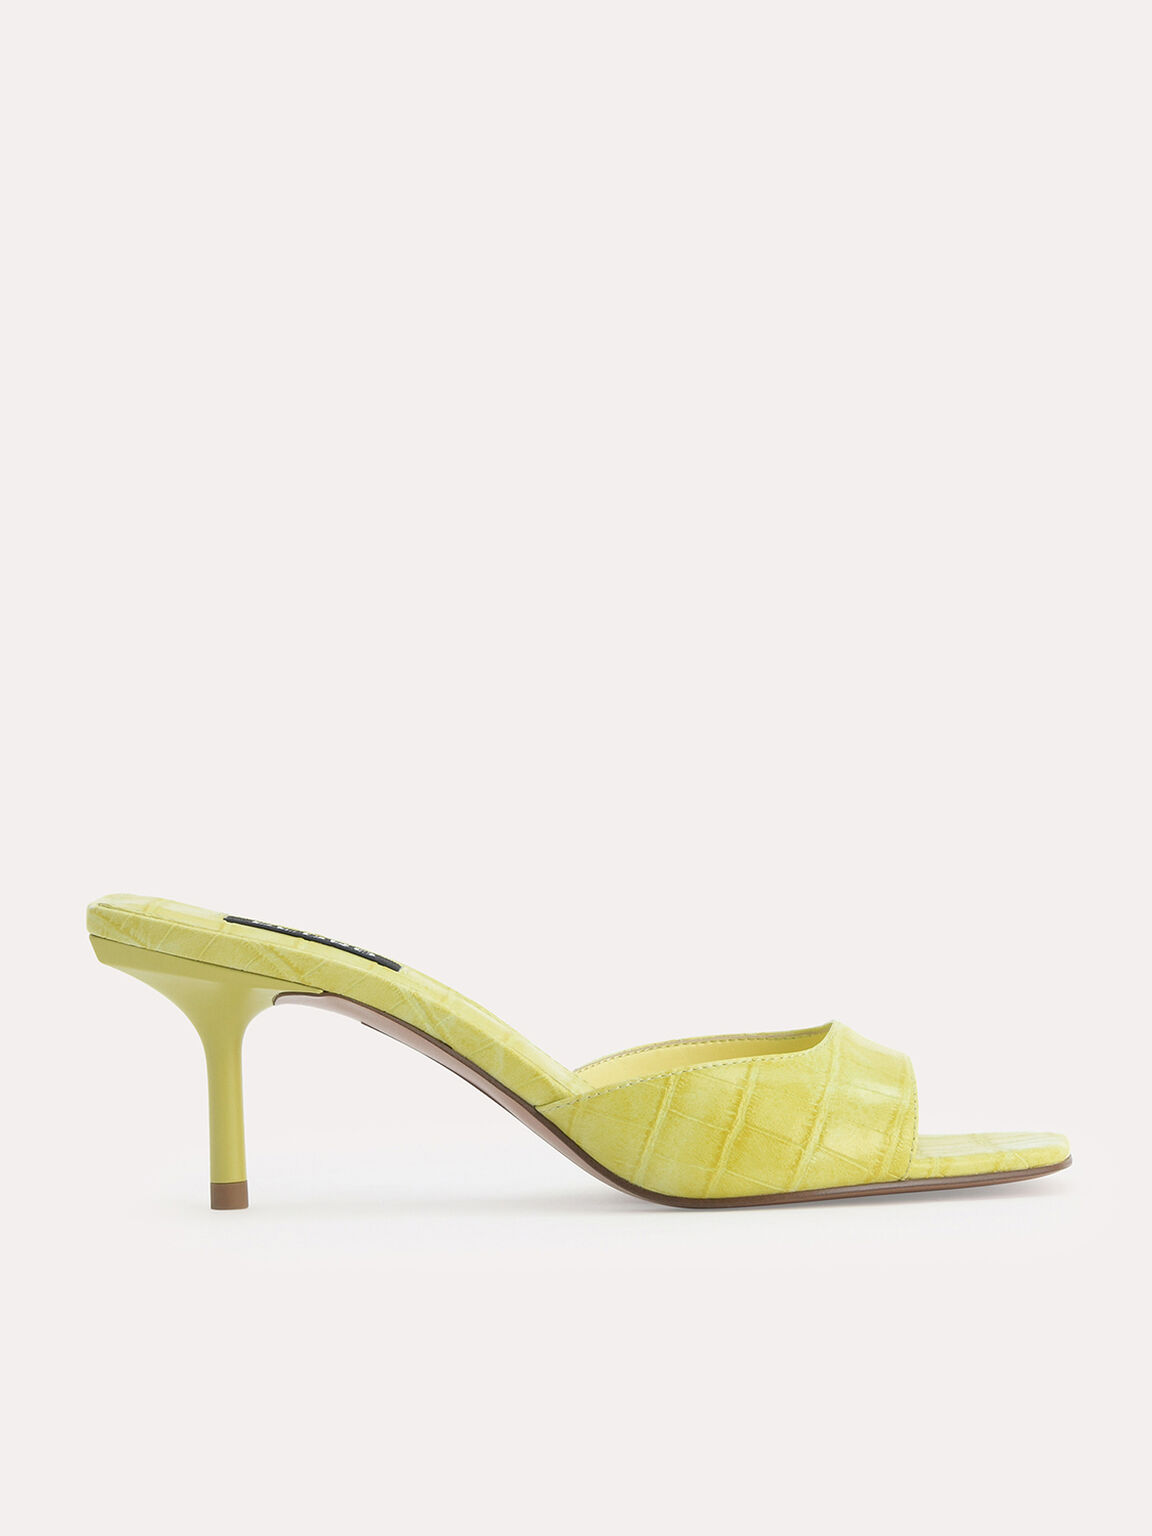 Croc-Effect Heeled Sandals, Yellow